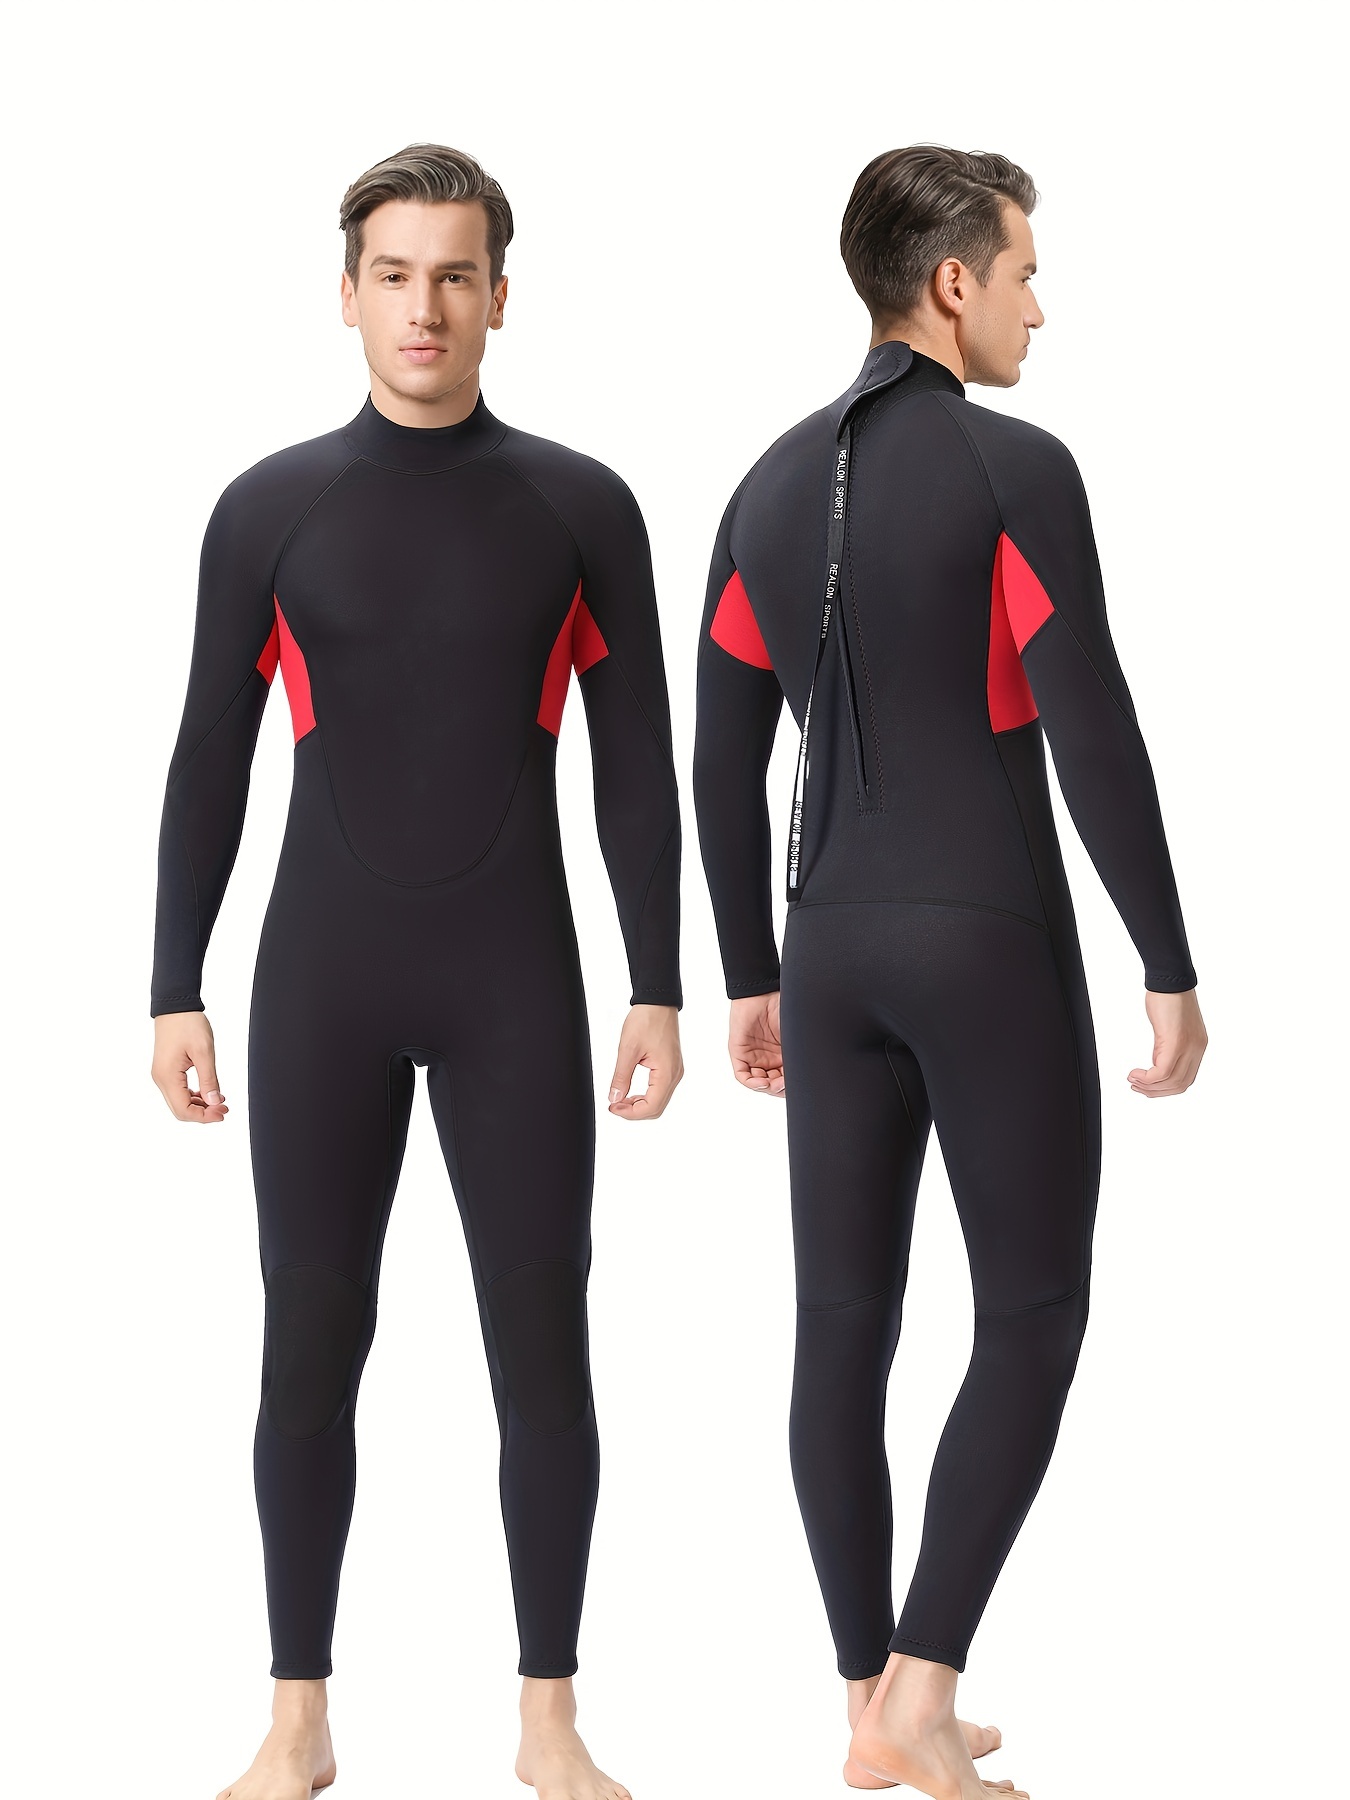 REALON Wetsuit Top Men 2mm Neoprene Jacket, Long Sleeves Swimsuit